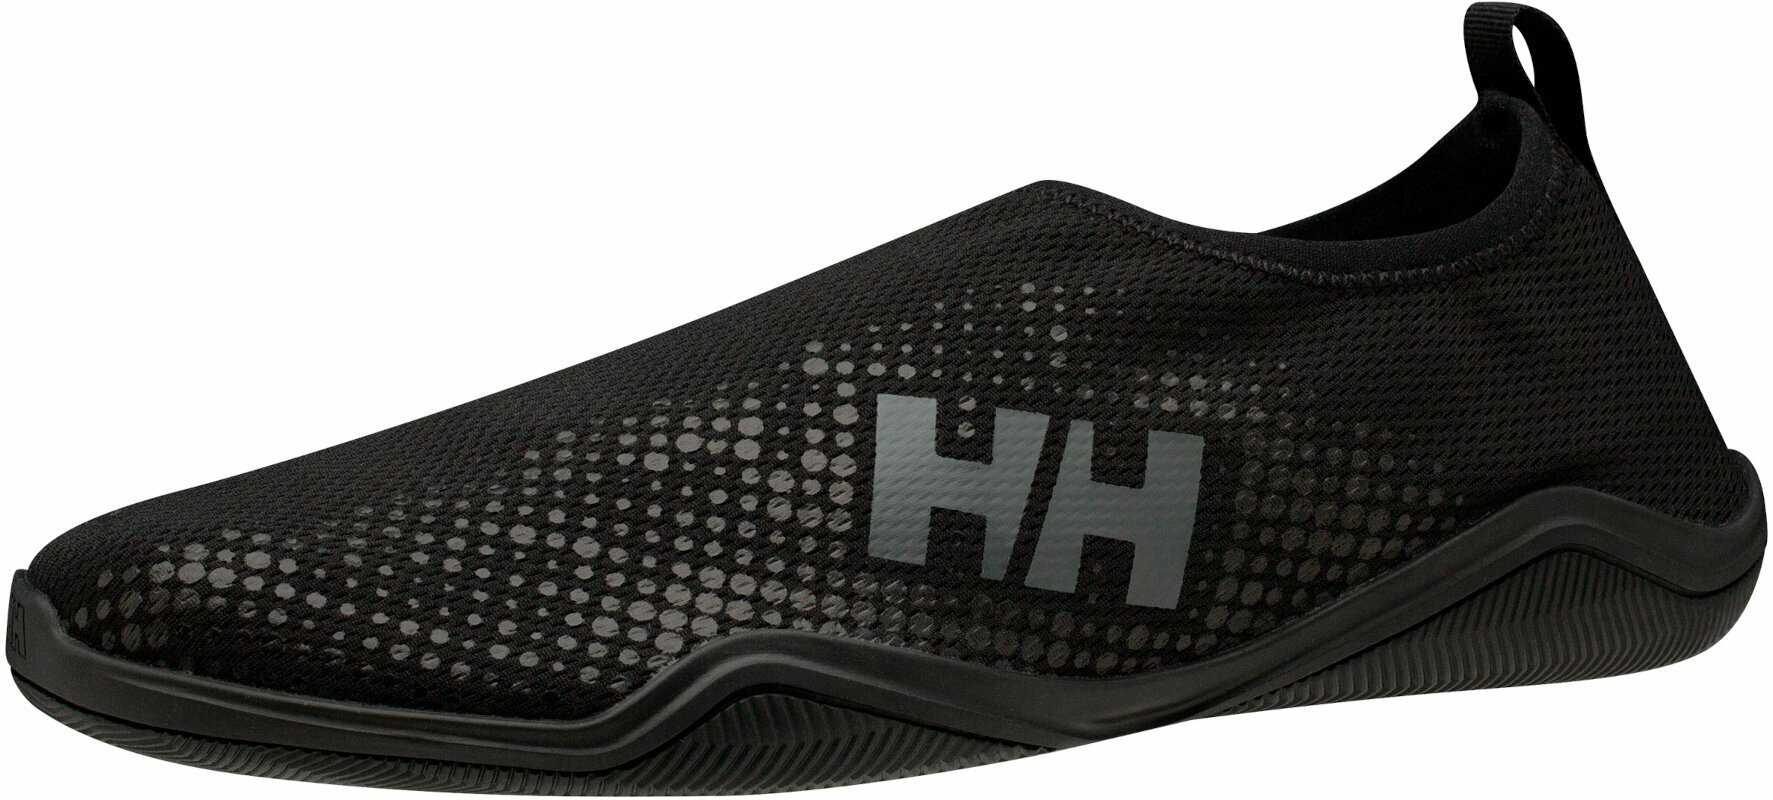 Jachtařská obuv Helly Hansen Men's Crest Watermoc Black/Charcoal 45